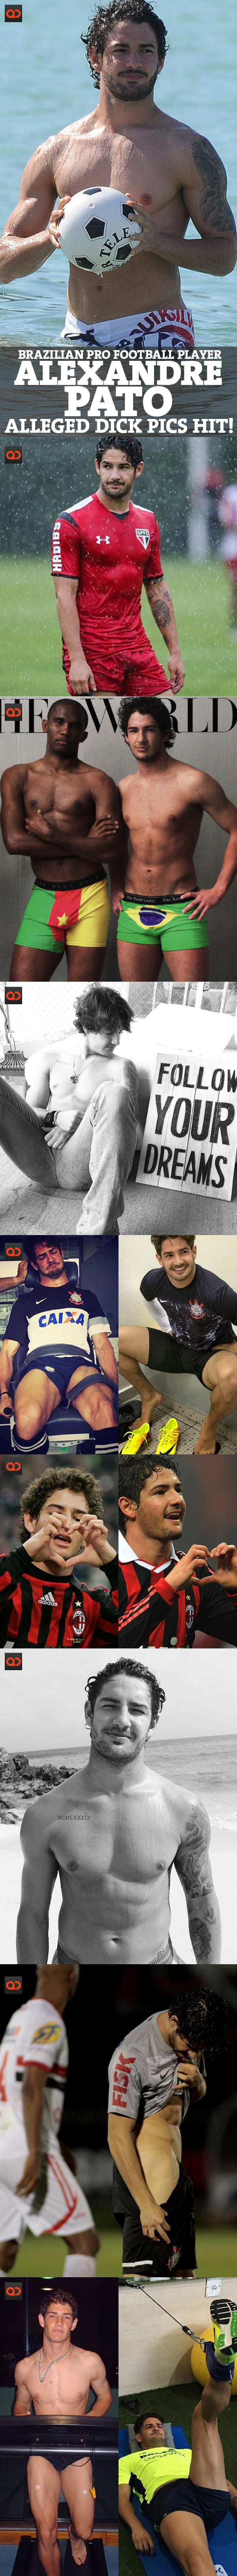 Alexandre Pato, Brazilian Pro Football Player, Alleged Dick Pics Hit!